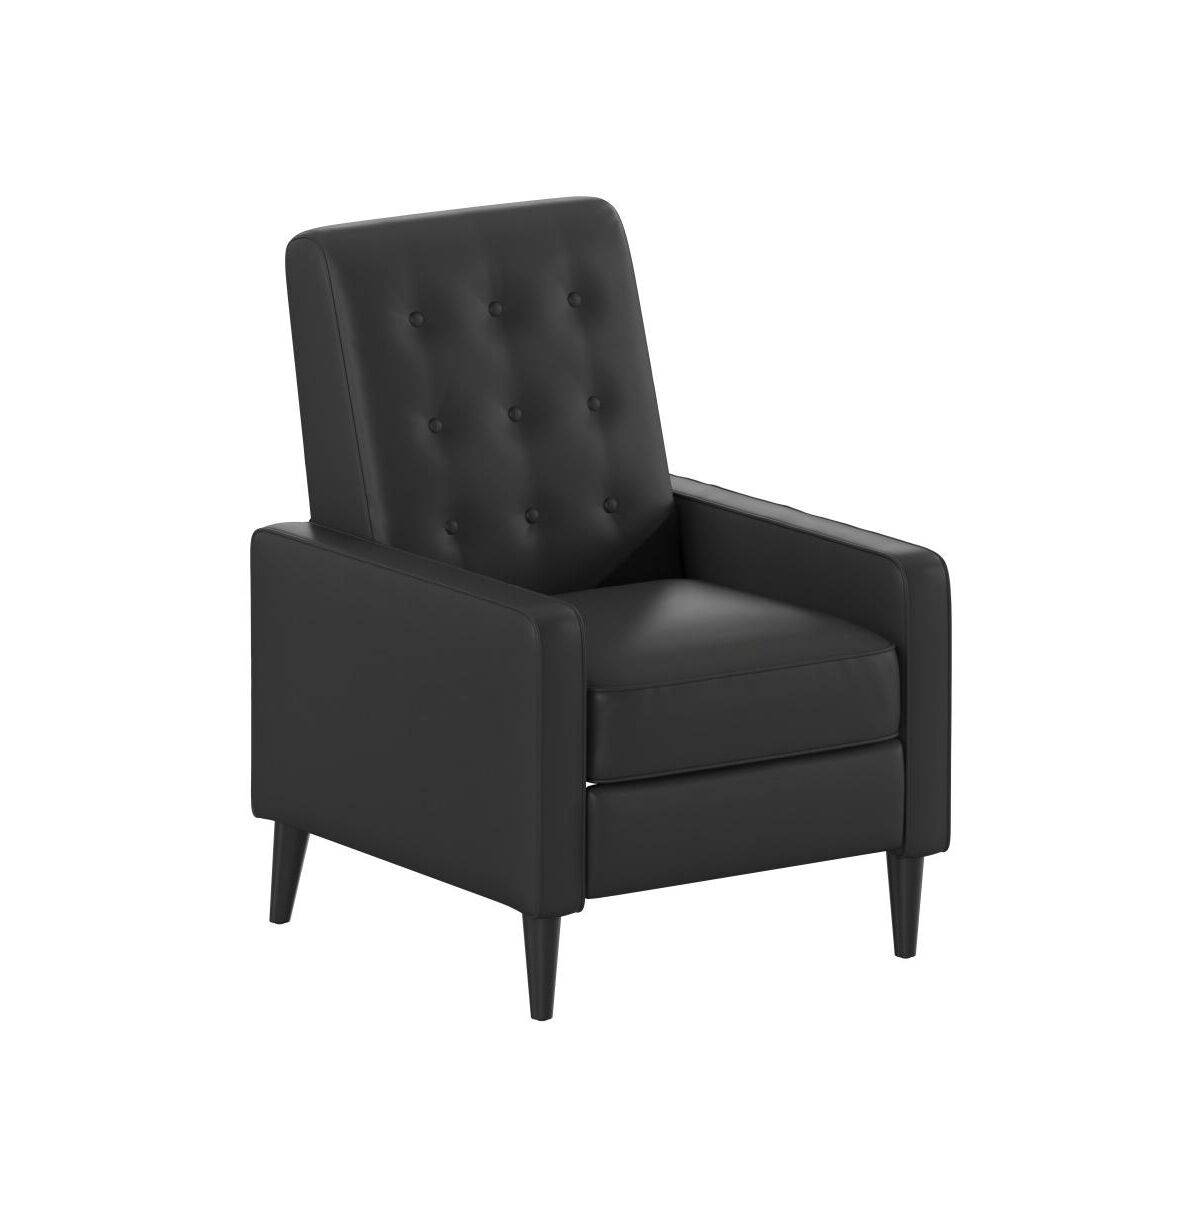 Merrick Lane Darcy Recliner Chair Mid-Century Modern Tufted Upholstery Ergonomic Push Back Living Room Recliner - Black